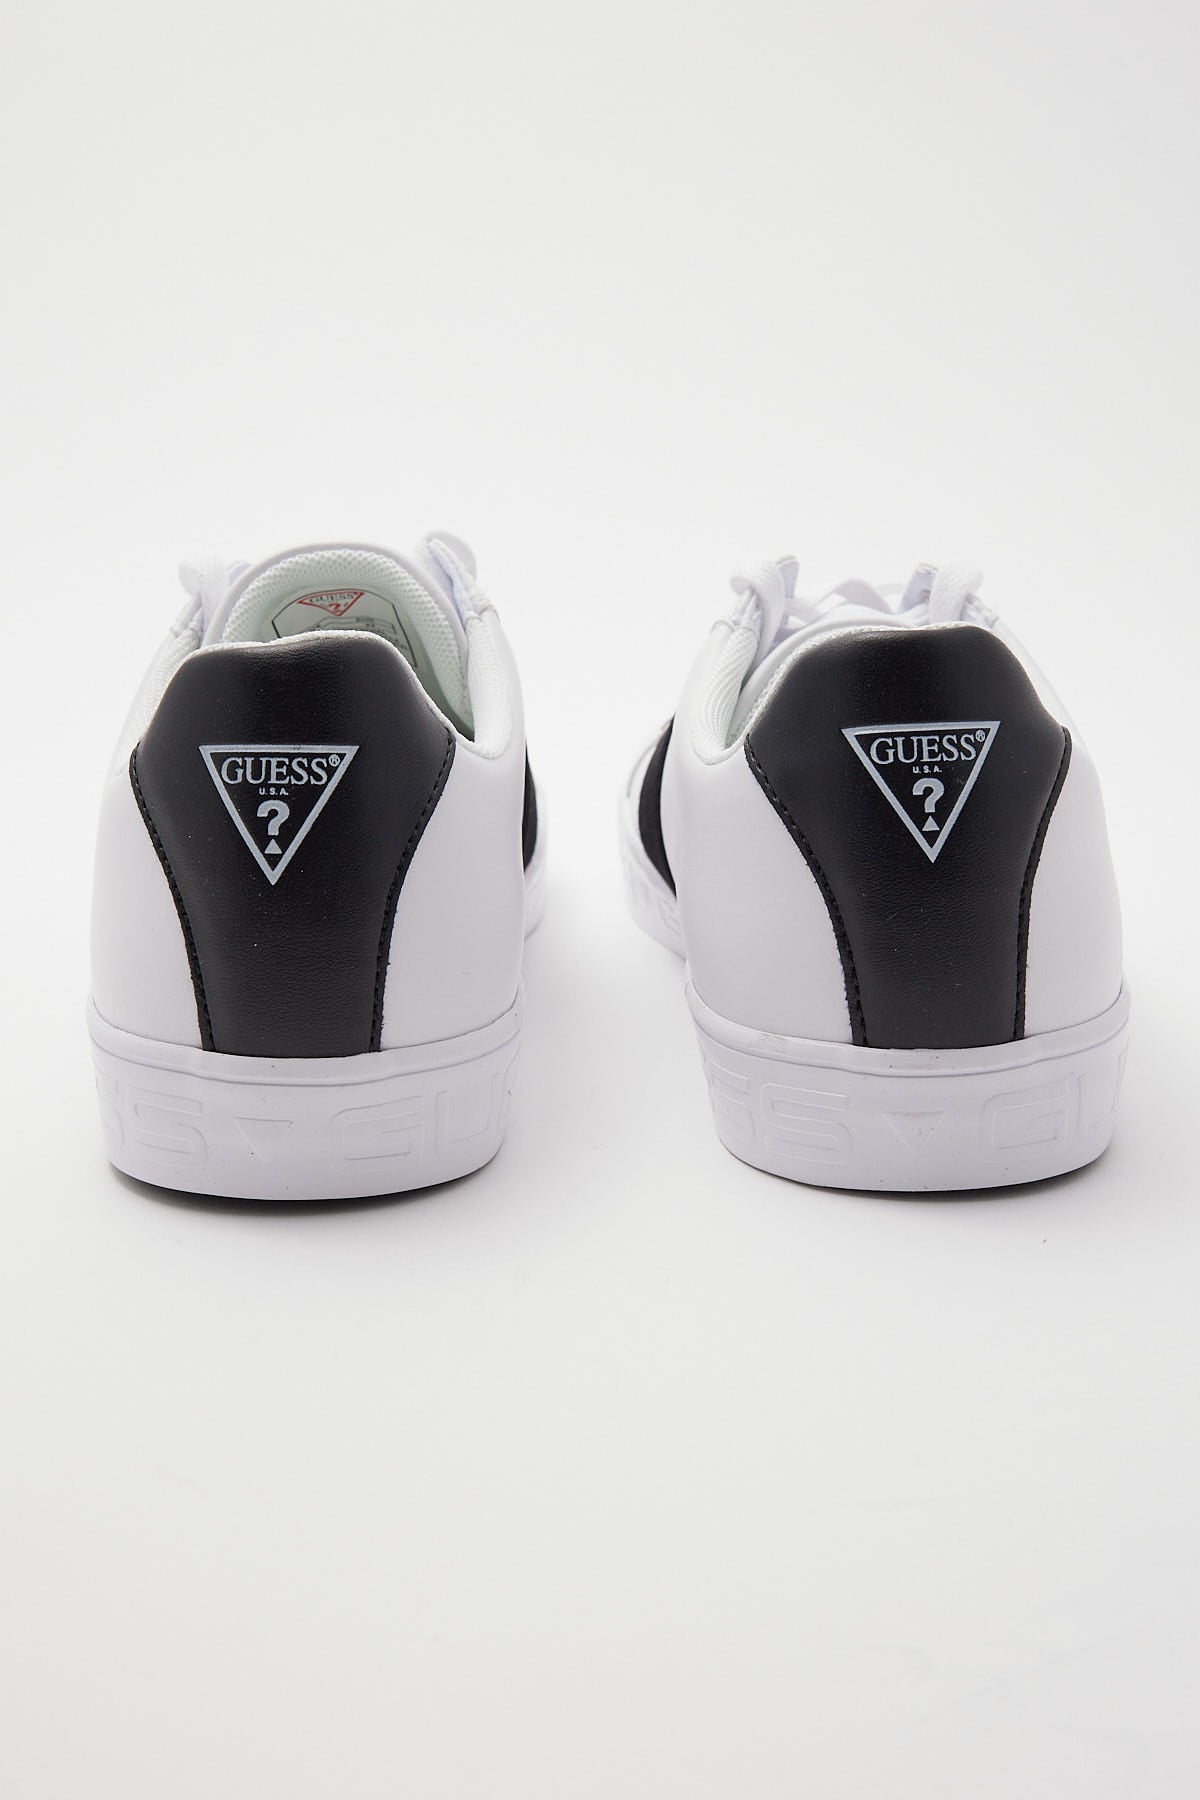 Guess Originals Paschal Sneaker White